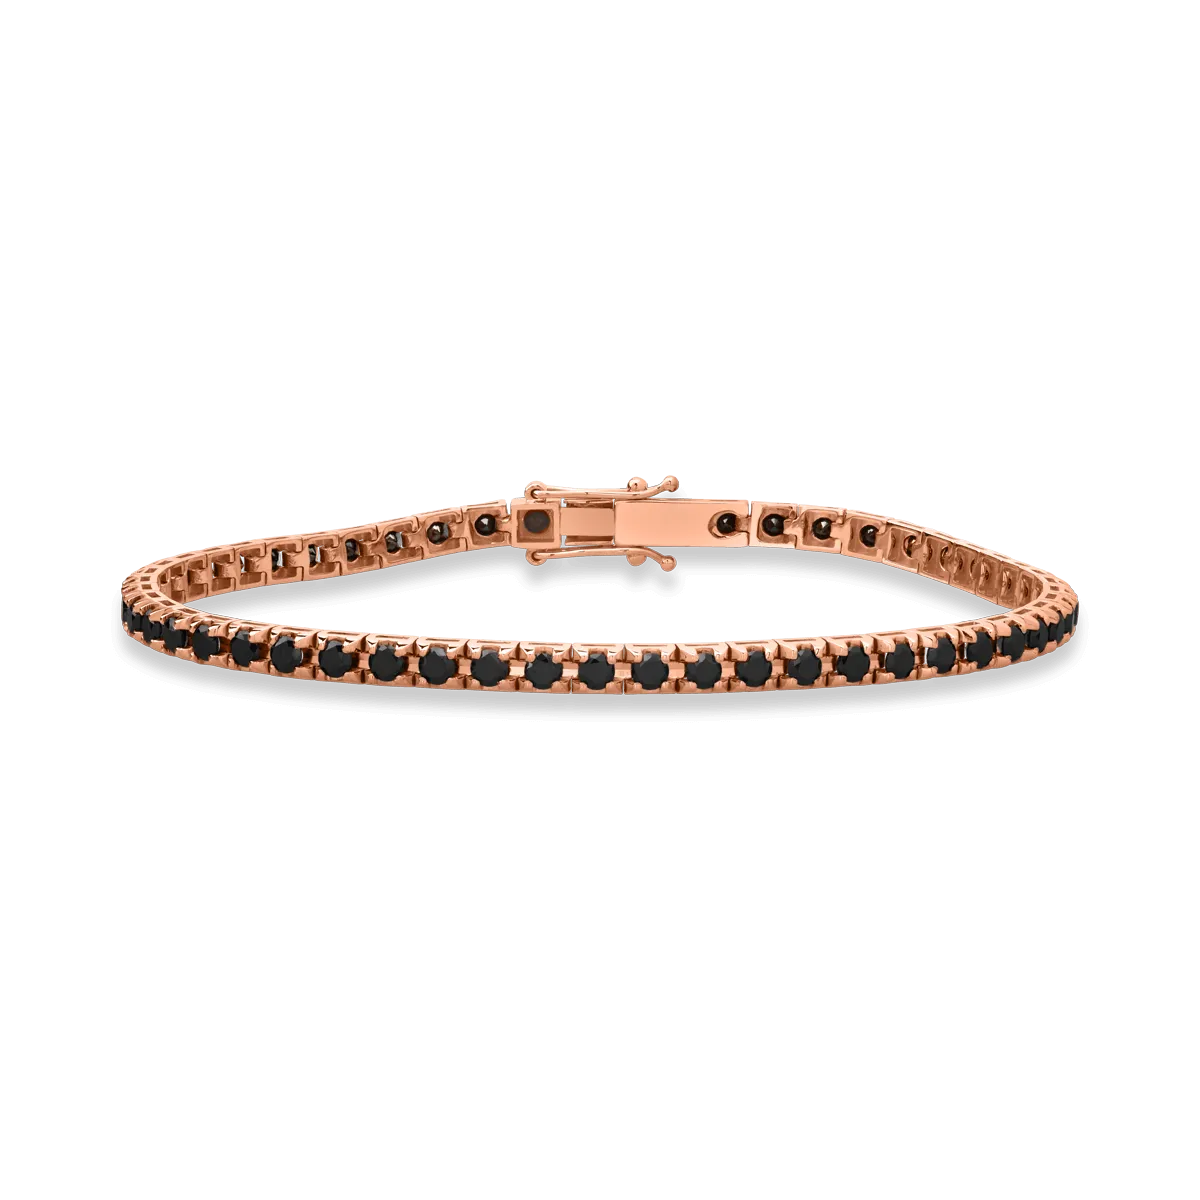 18K rose gold tennis bracelet with 2.3ct black diamonds